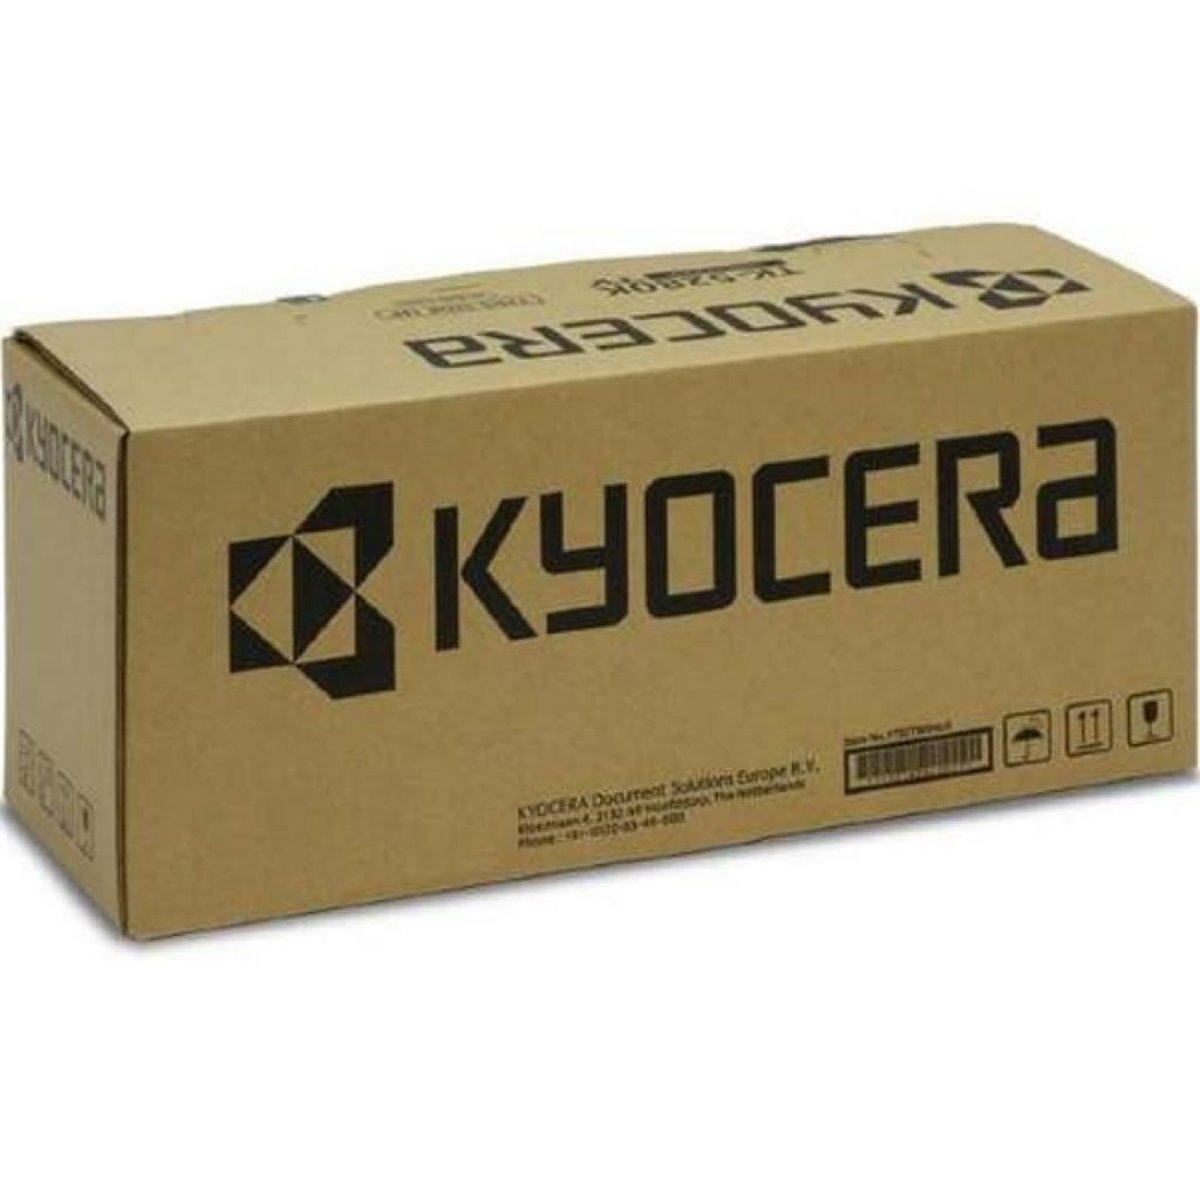 Kyocera FK-8350